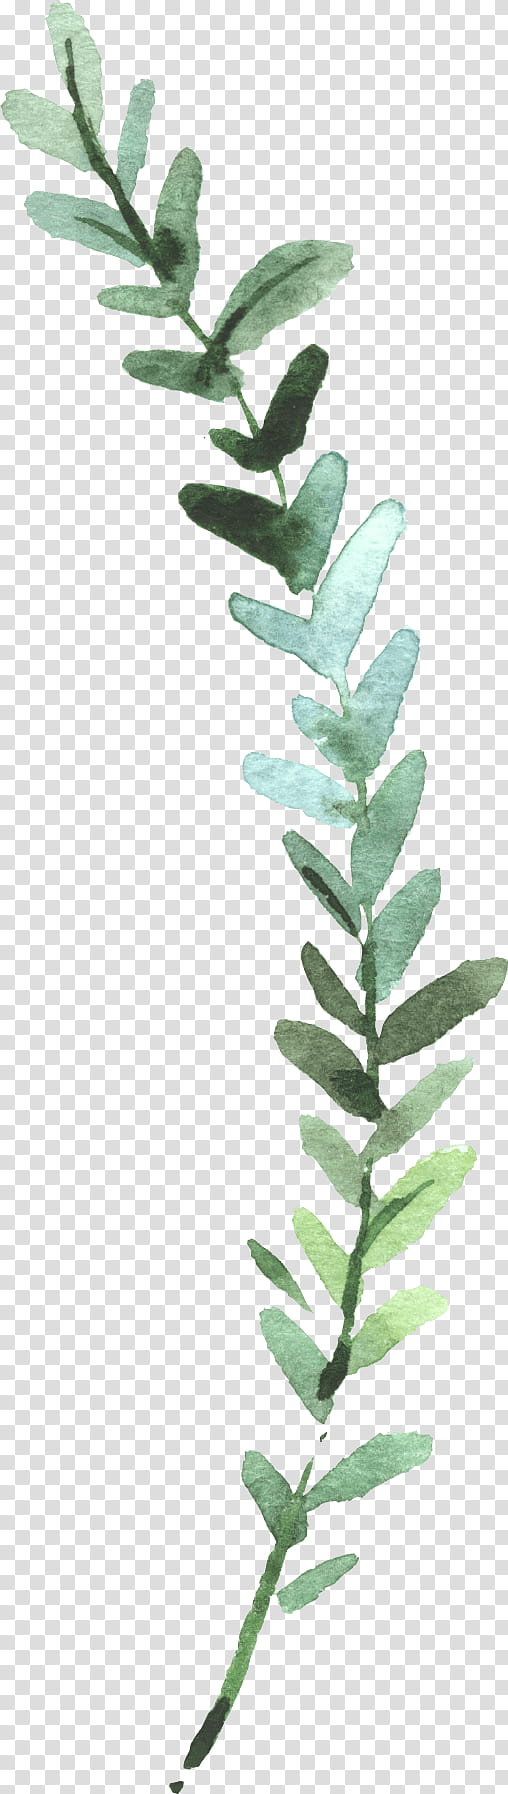 Watercolor Tree, Watercolor Painting, Leaf, Plants, Twig, Plant Stem ...